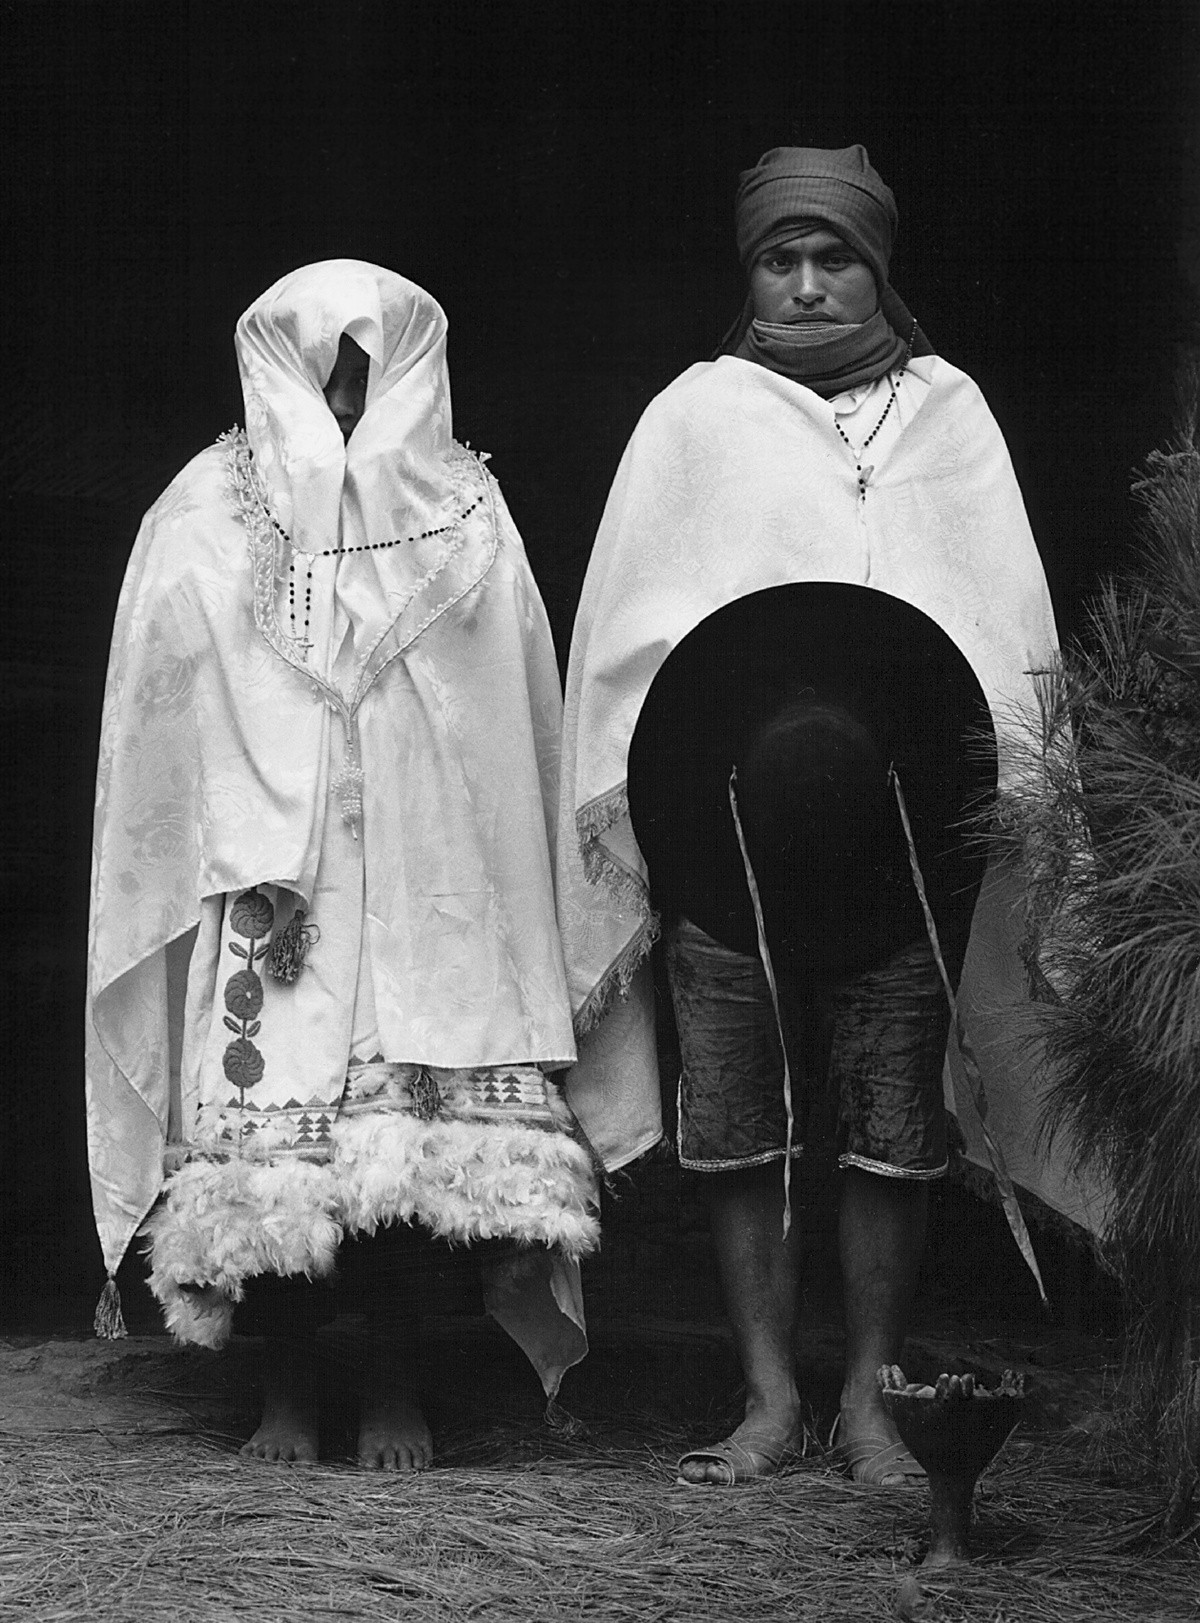 Бракосочетание, Зинакантеко, Мексика, 1987. Фотограф Флор Гардуньо